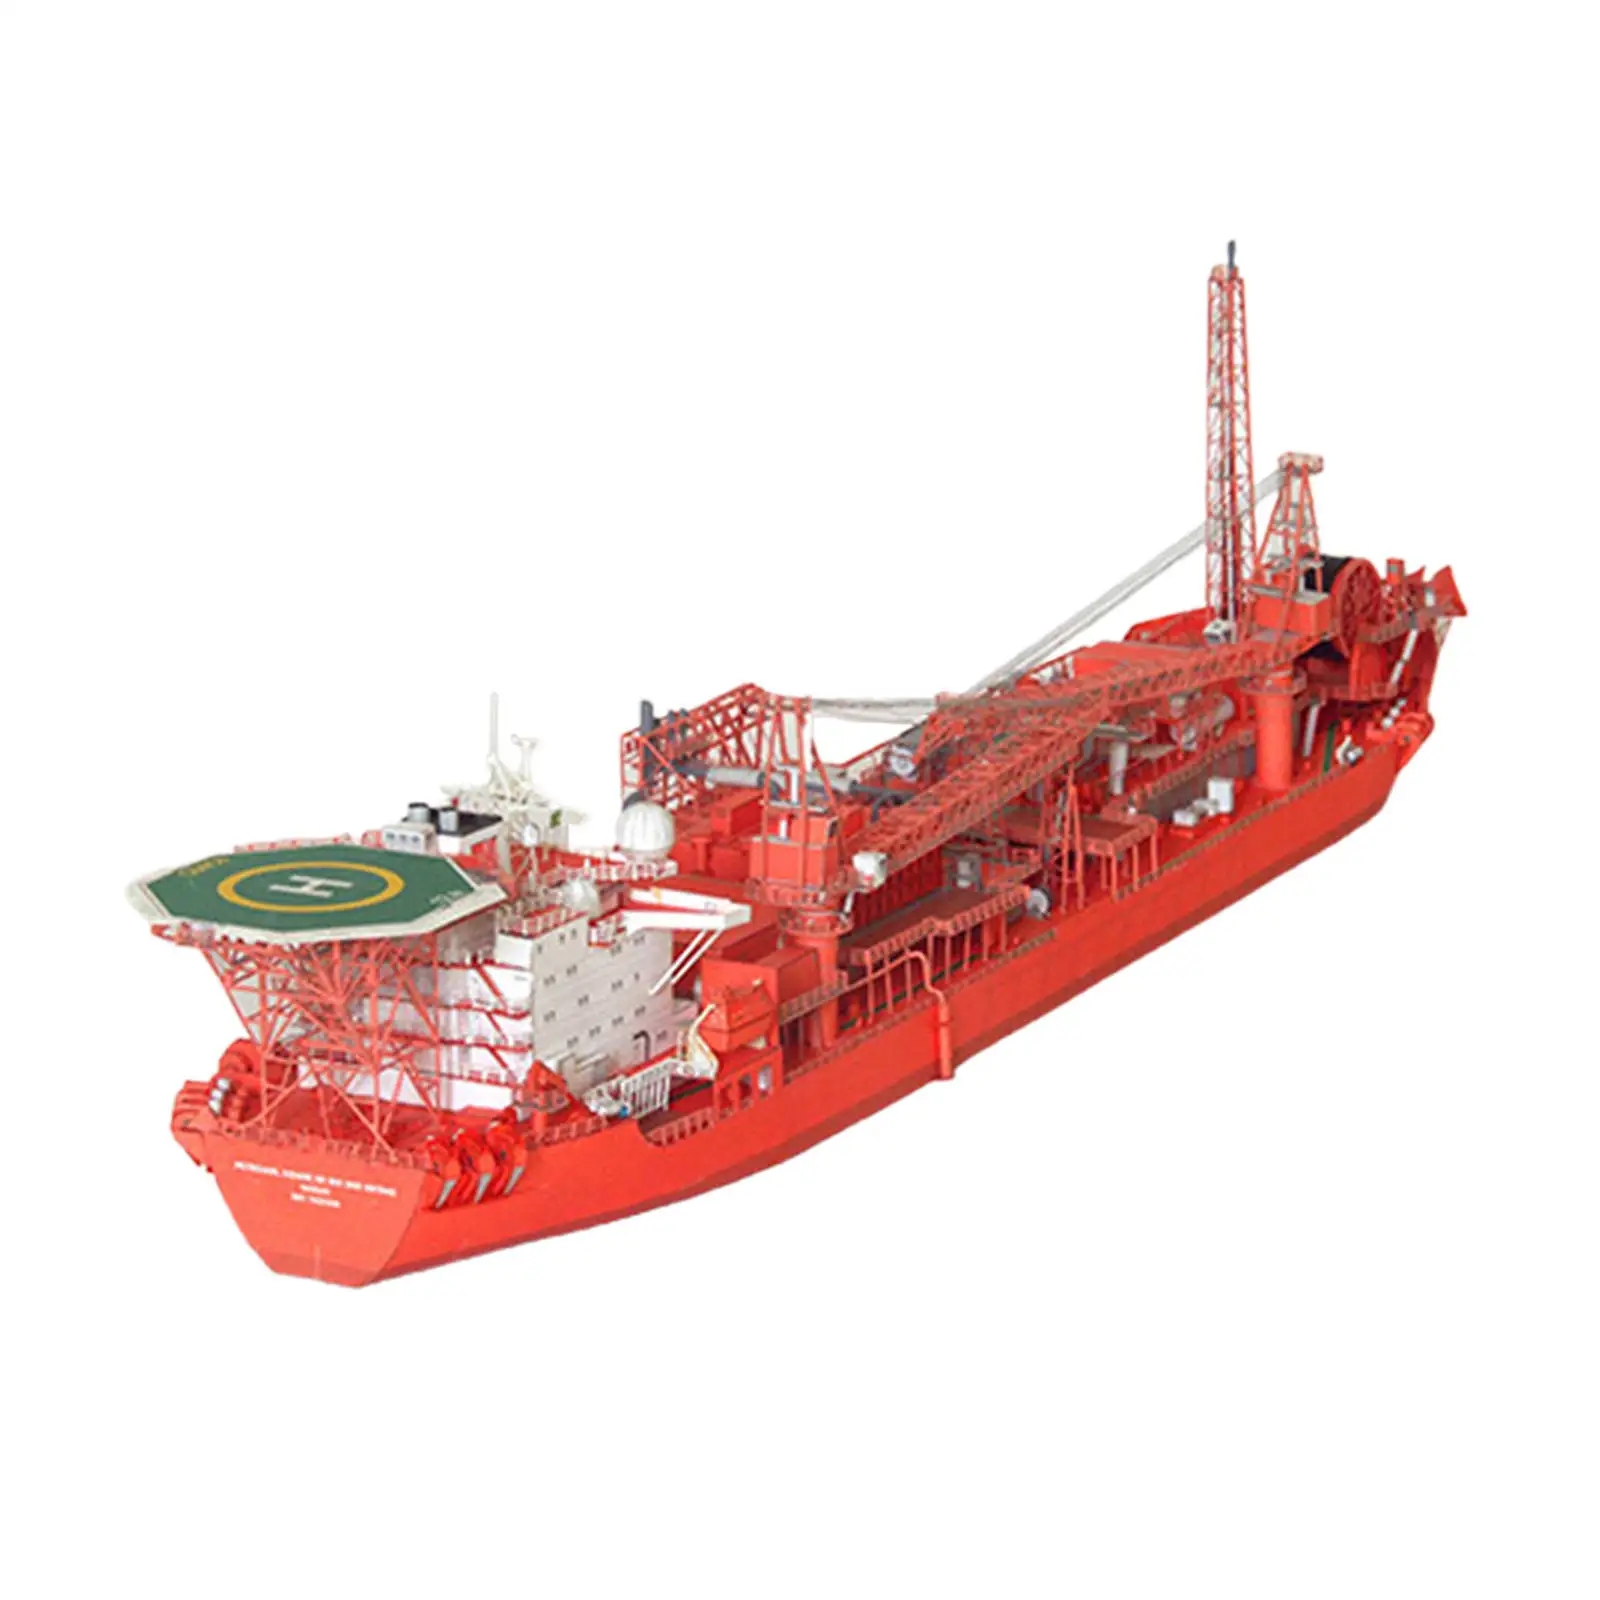 Offshore Floating Production Tanker 3D Paper Model Ship Education Papercraft